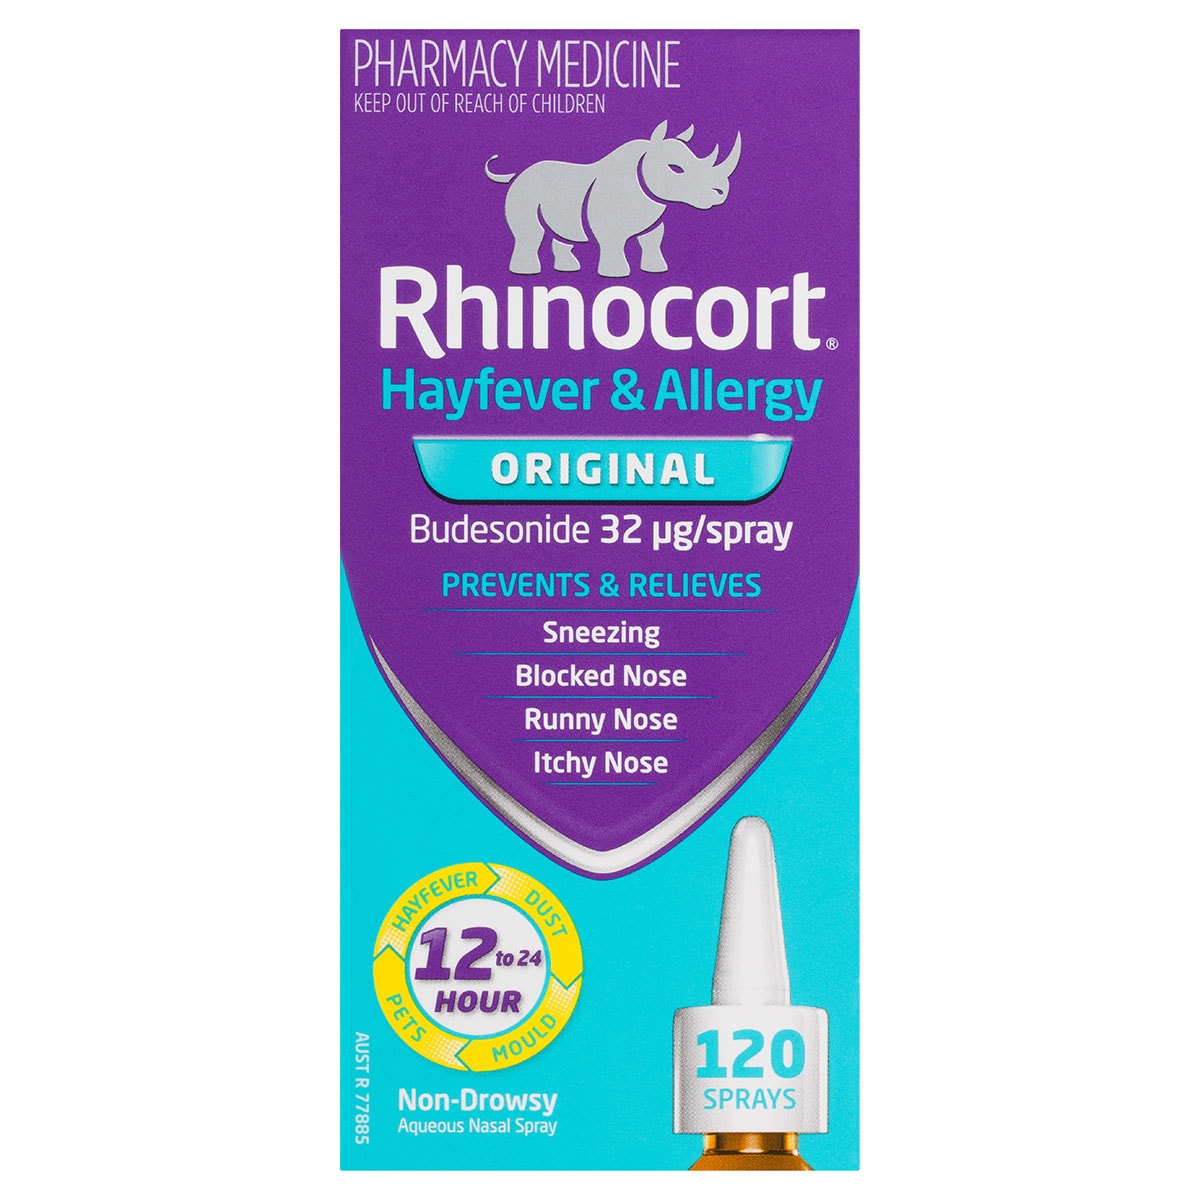 Rhinocort Hayfever & Allergy Original Nasal Spray 120 Sprays